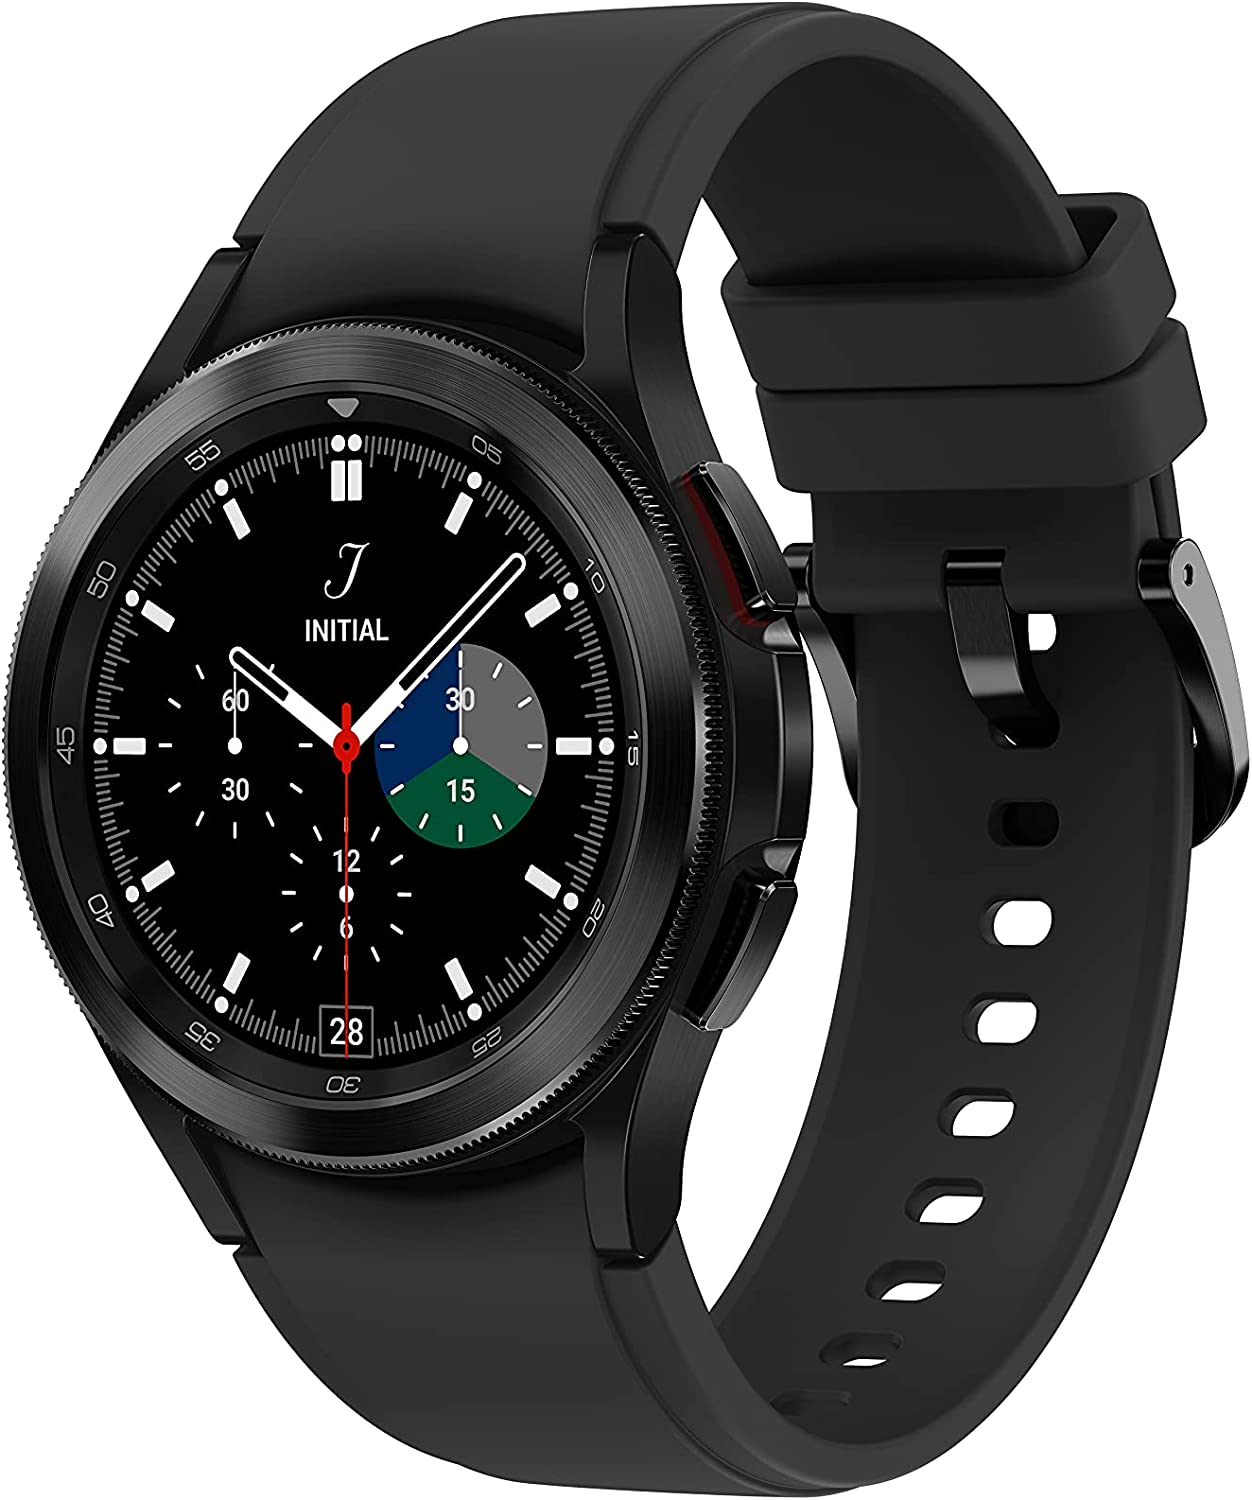 Refurbished Samsung Galaxy Watch4 Classic 42mm R885 (Black or Silver) GPS + Cellular $69.99 + Free Shipping